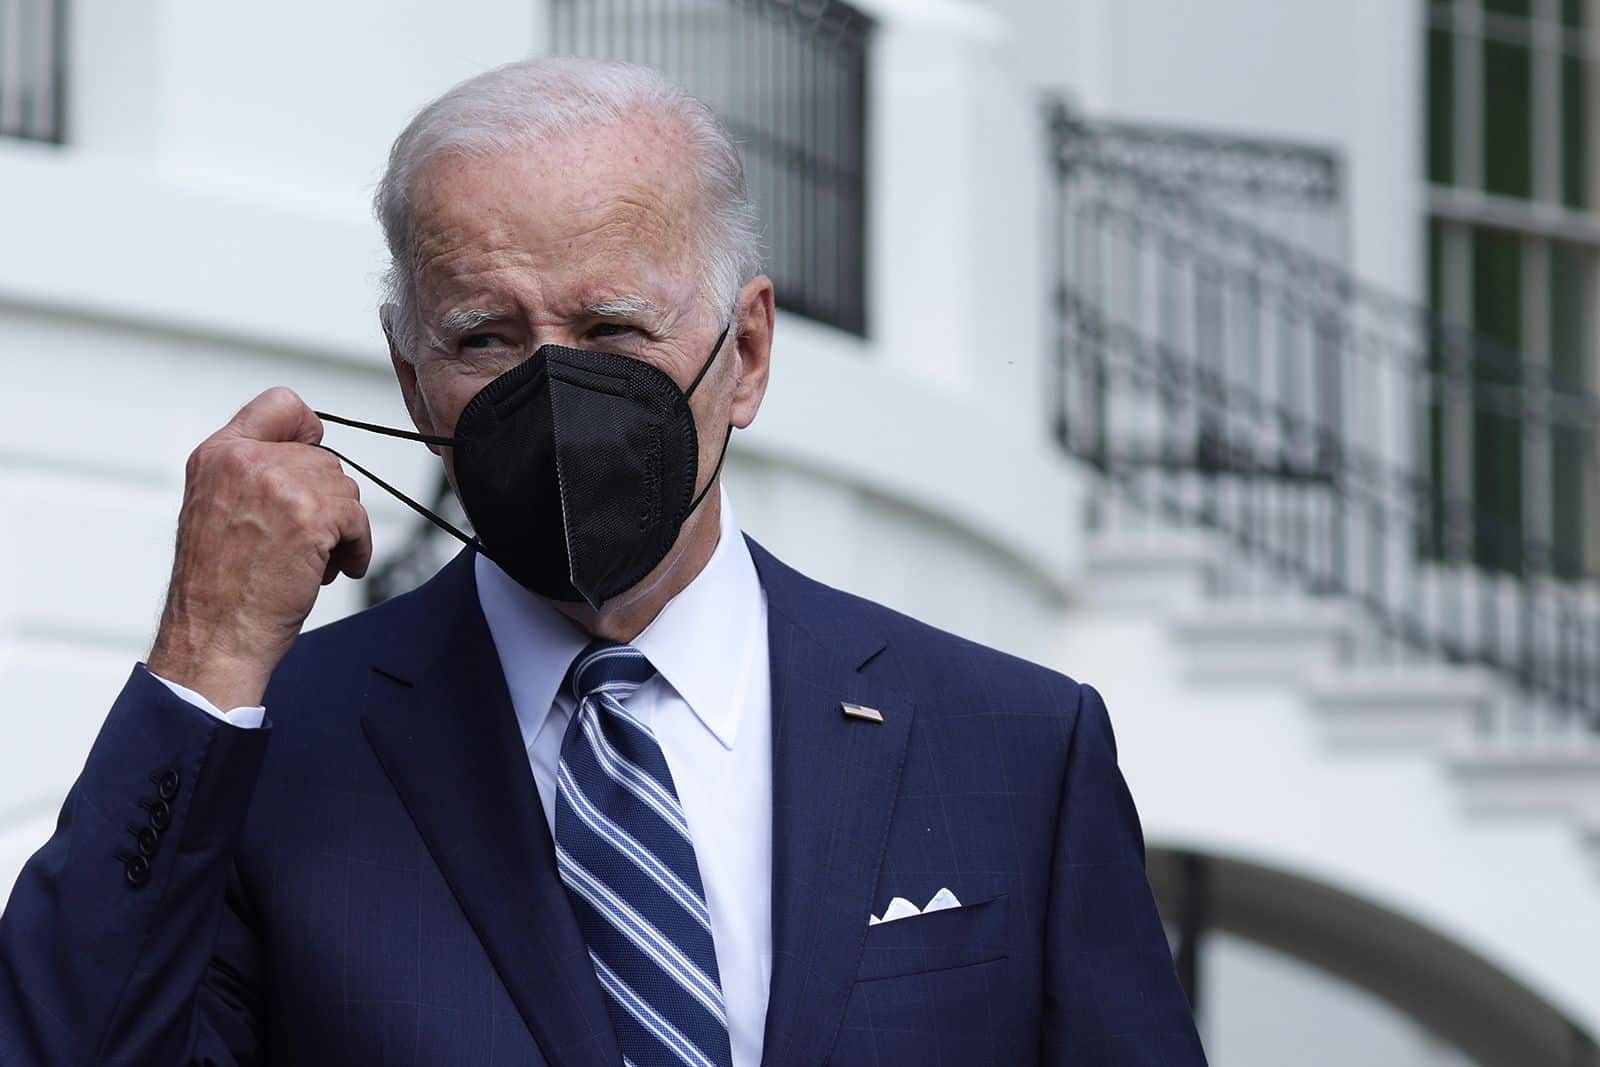 US President Joe Biden stands in a suit wearing a mask, but is taking off one side of it.